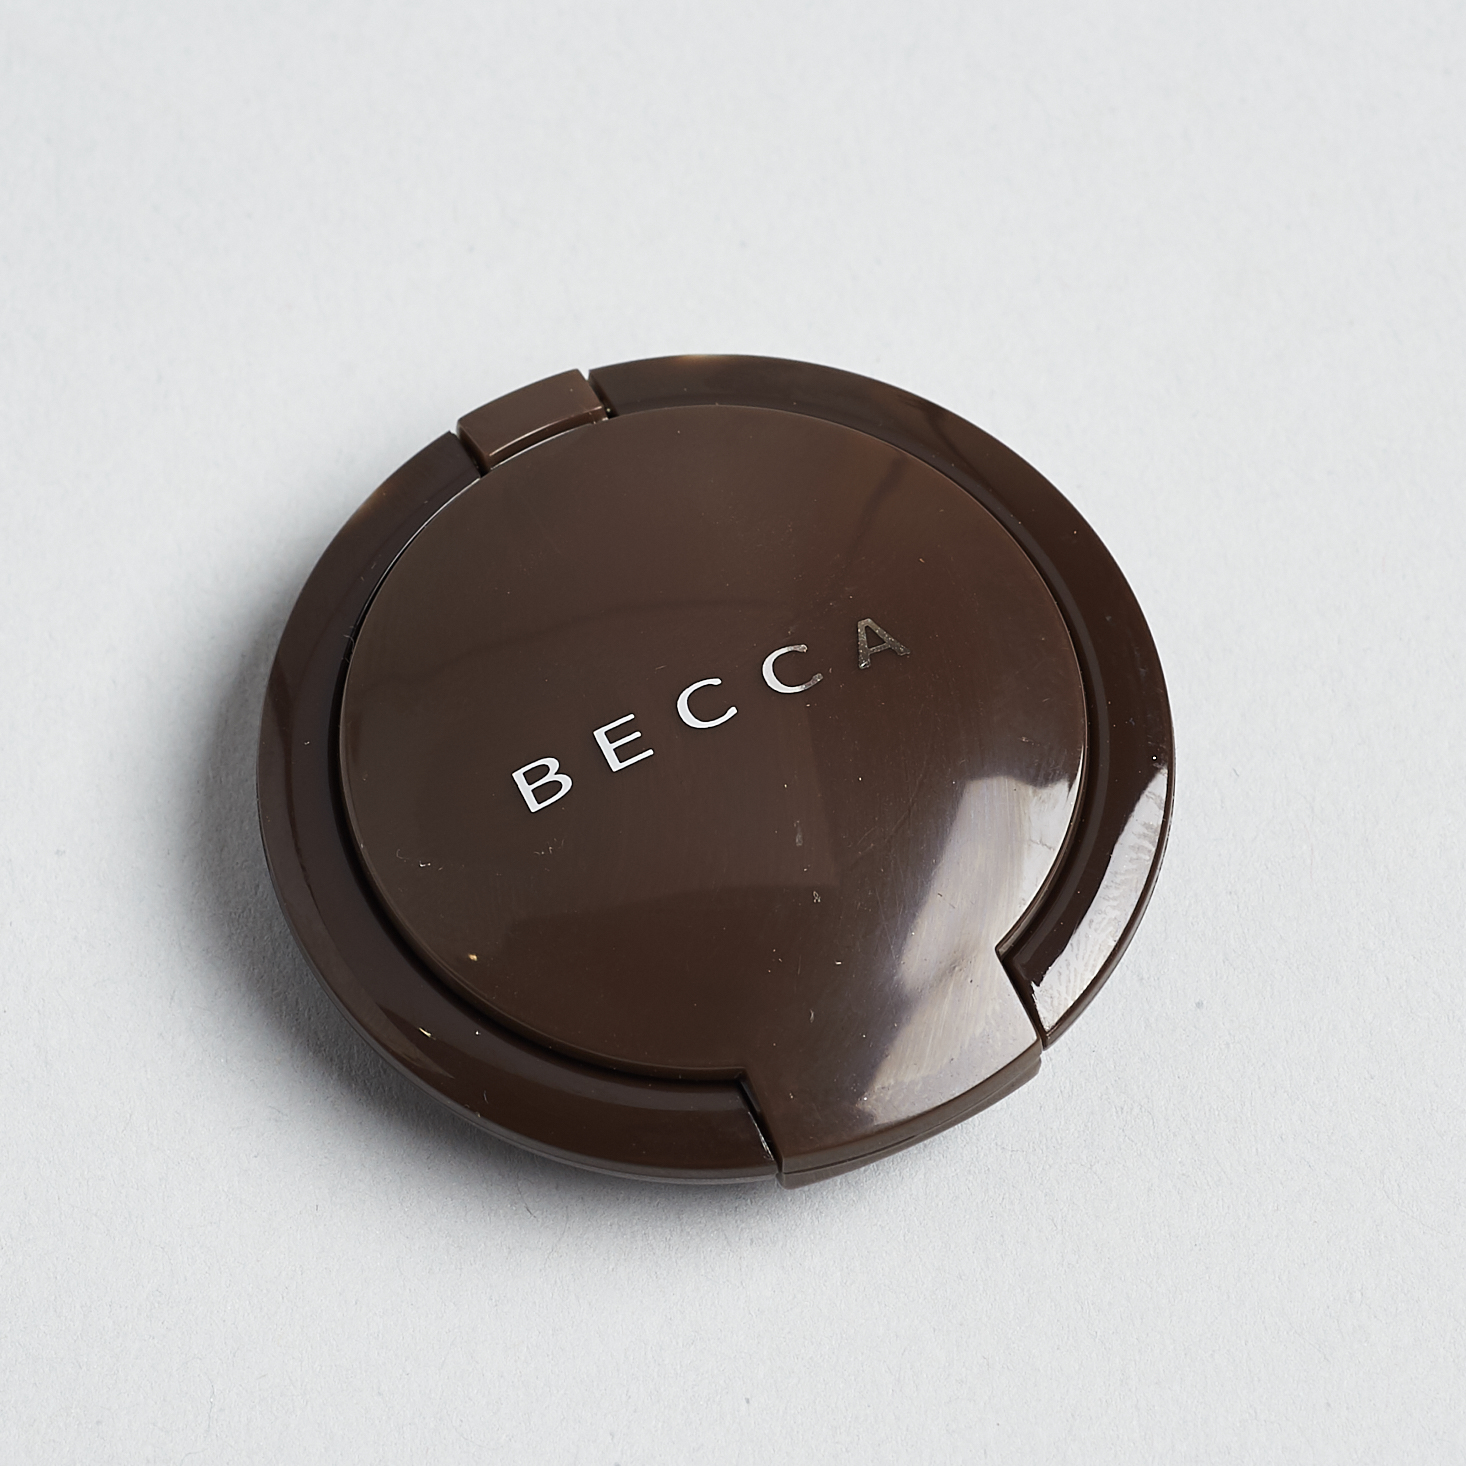 round brown mini powder compact with becca branding